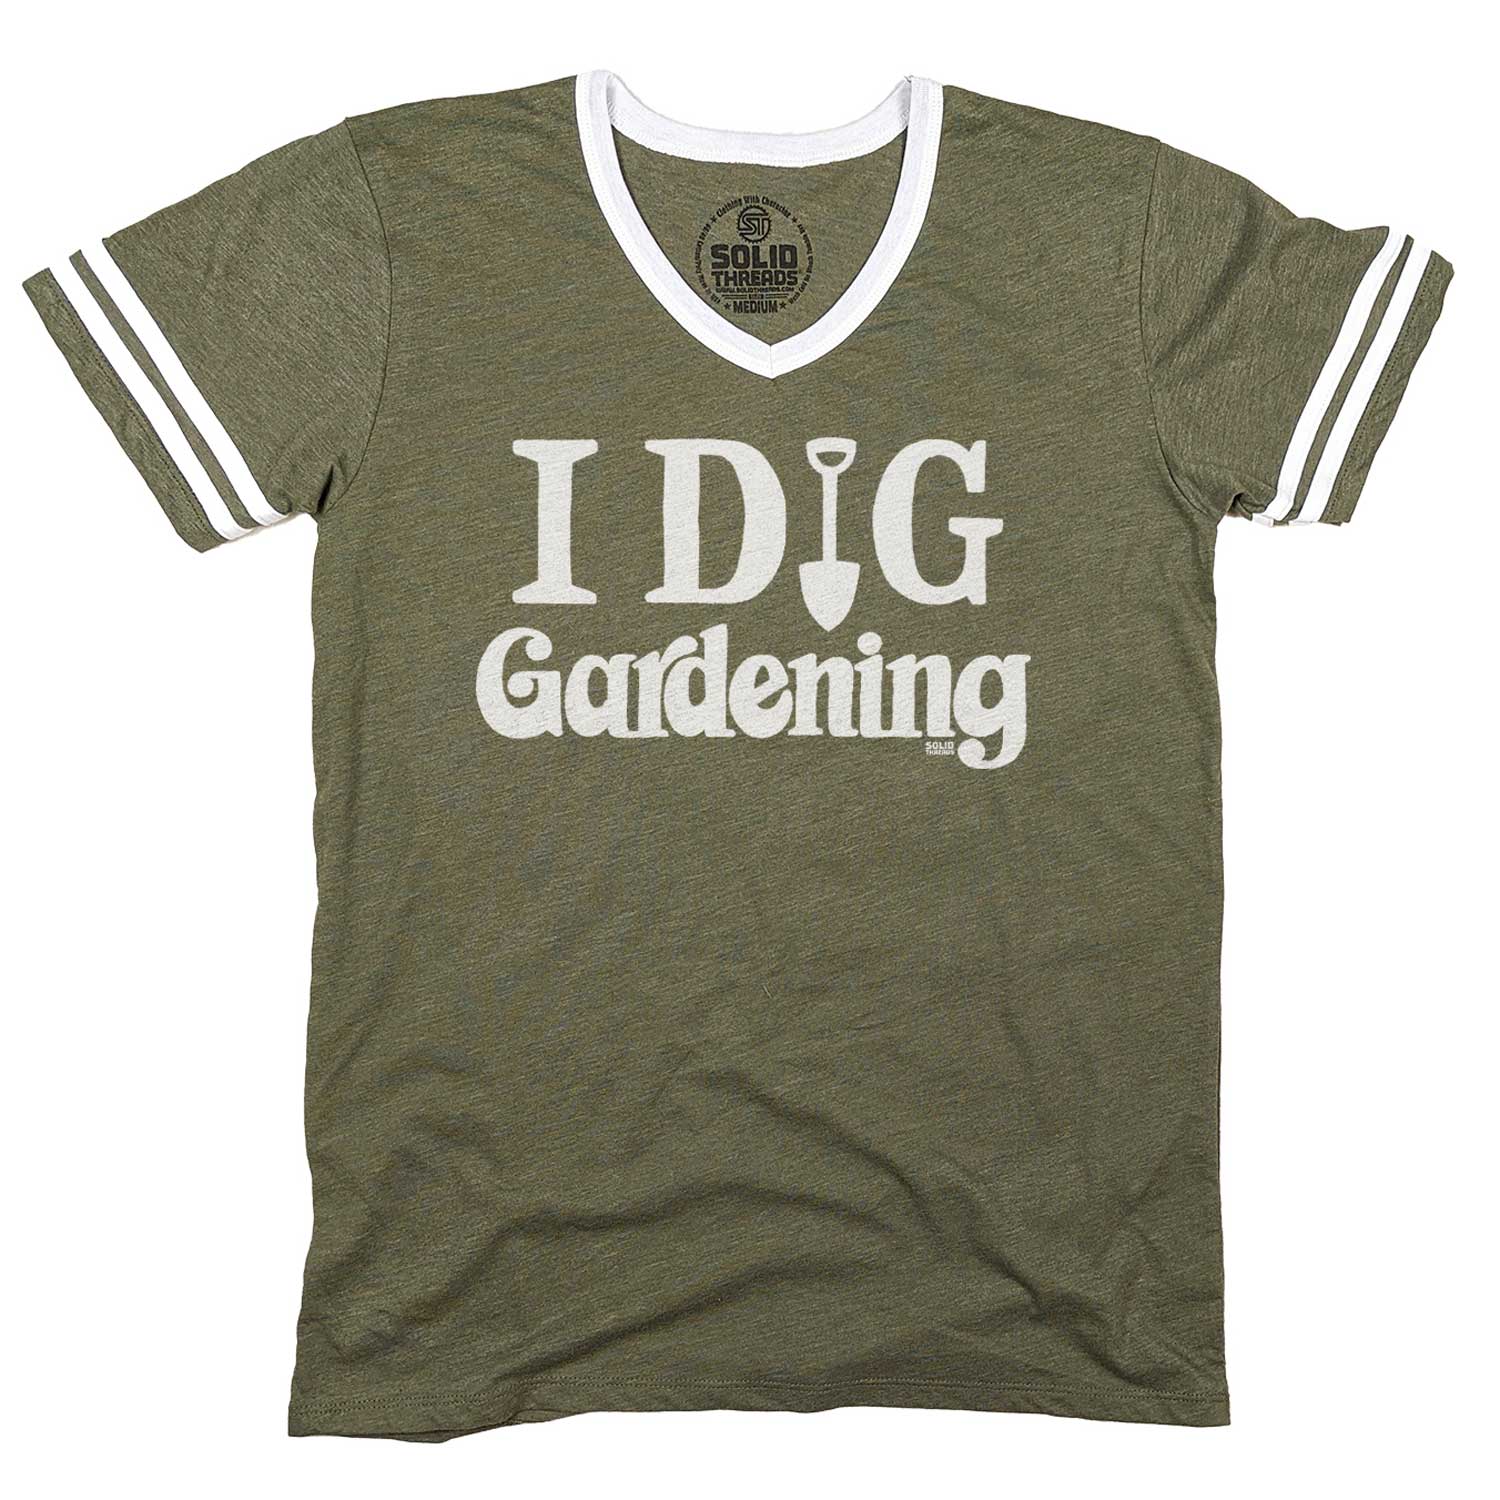 Men's I Dig Gardening Vintage Graphic V-Neck Tee | Retro Garden T-shirt | Solid Threads